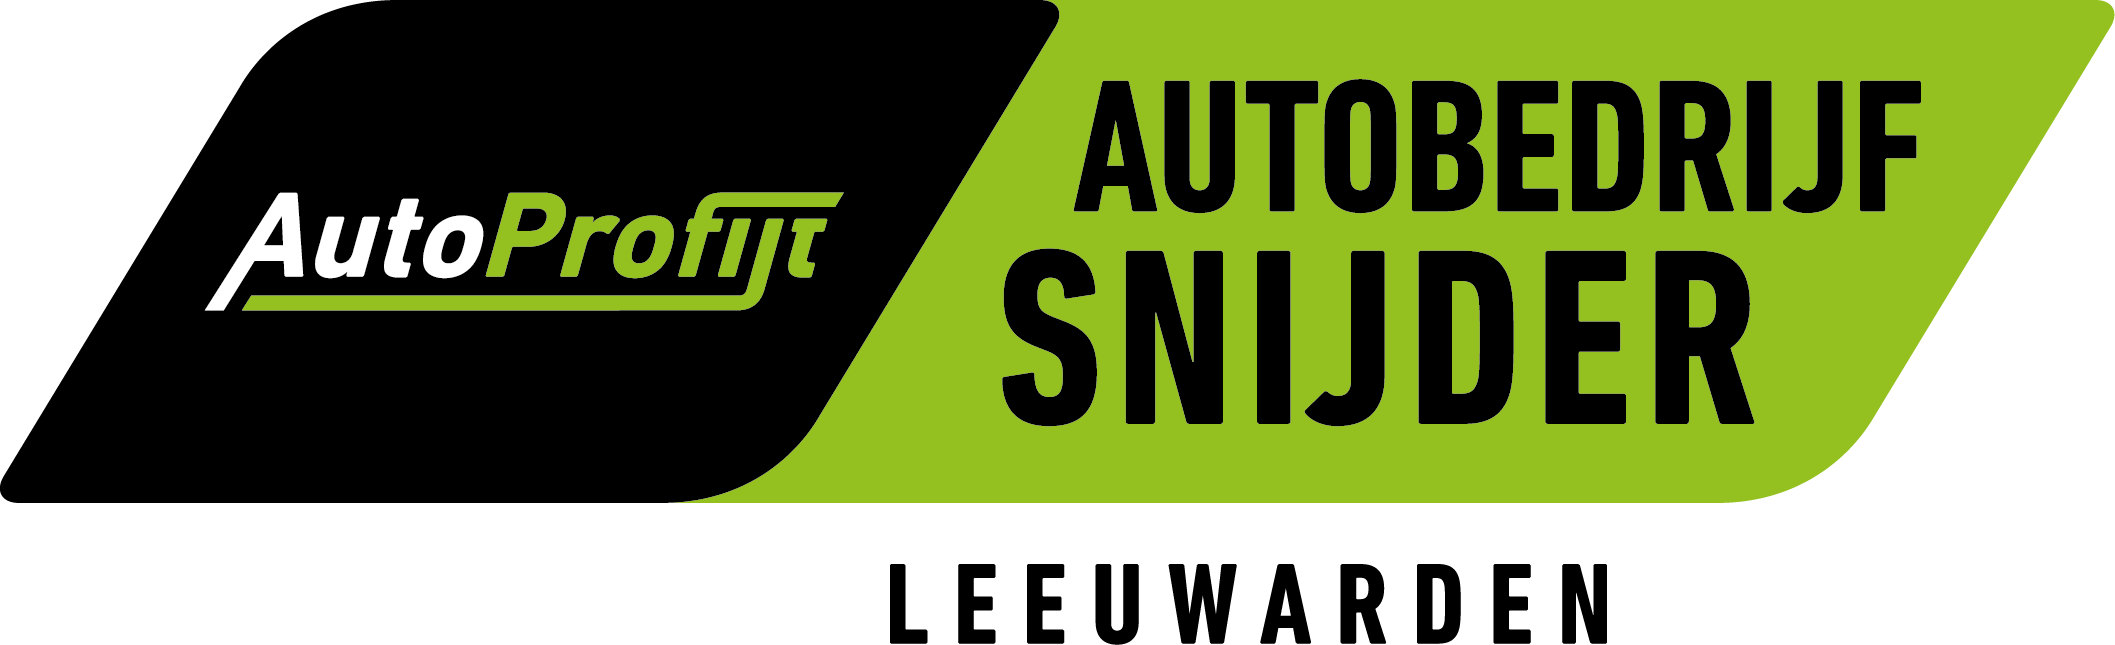 Autobedrijf Snijder logo